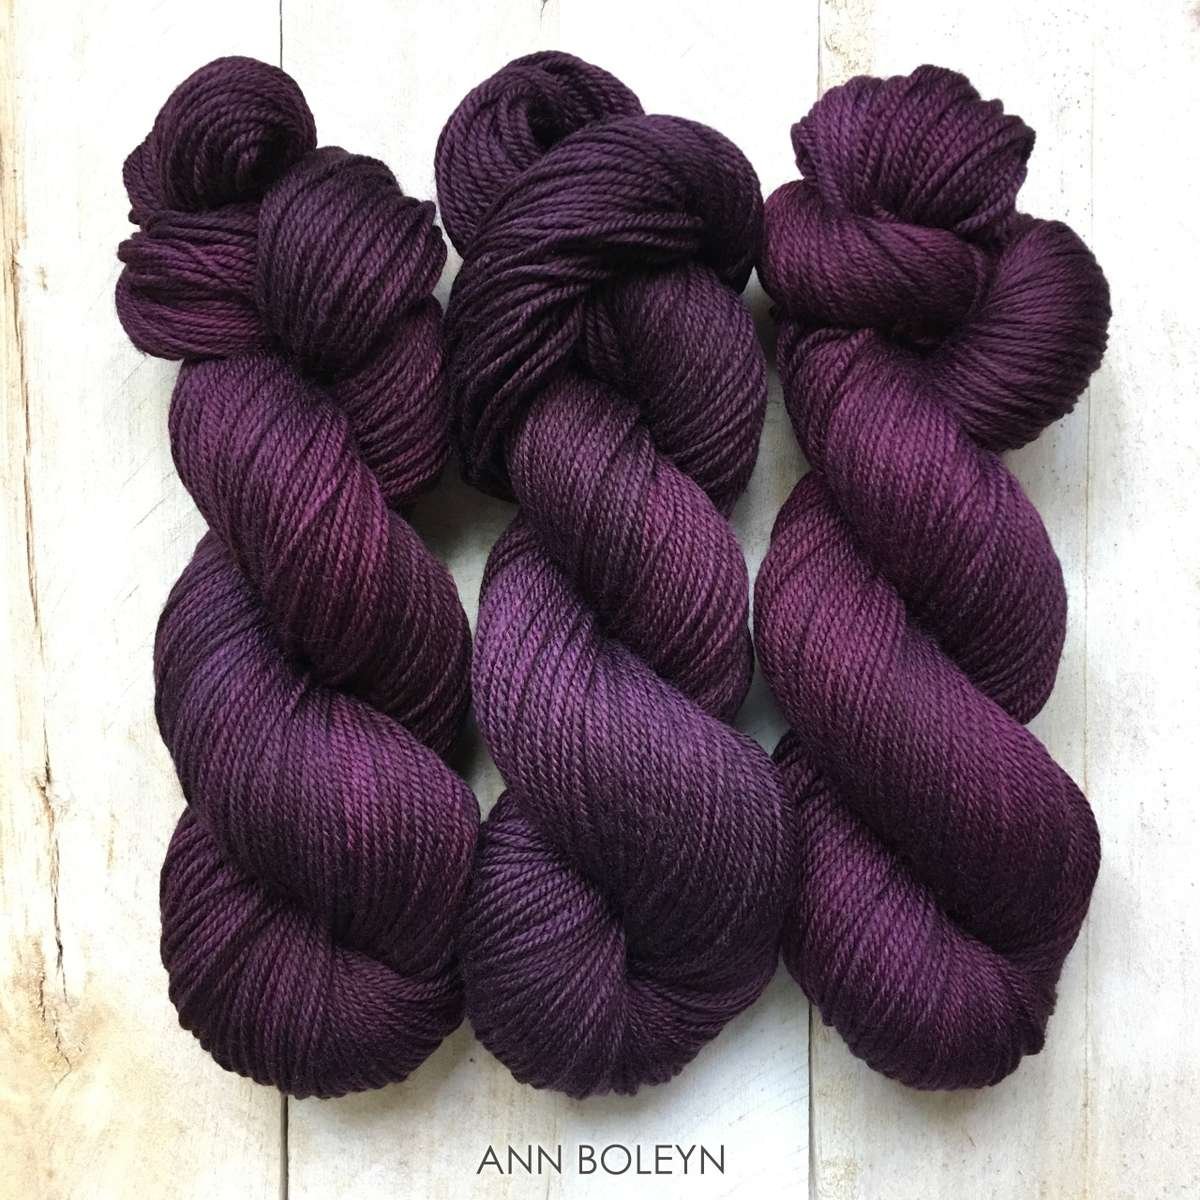 Hand-dyed yarn Louise Robert Ann Boleyn